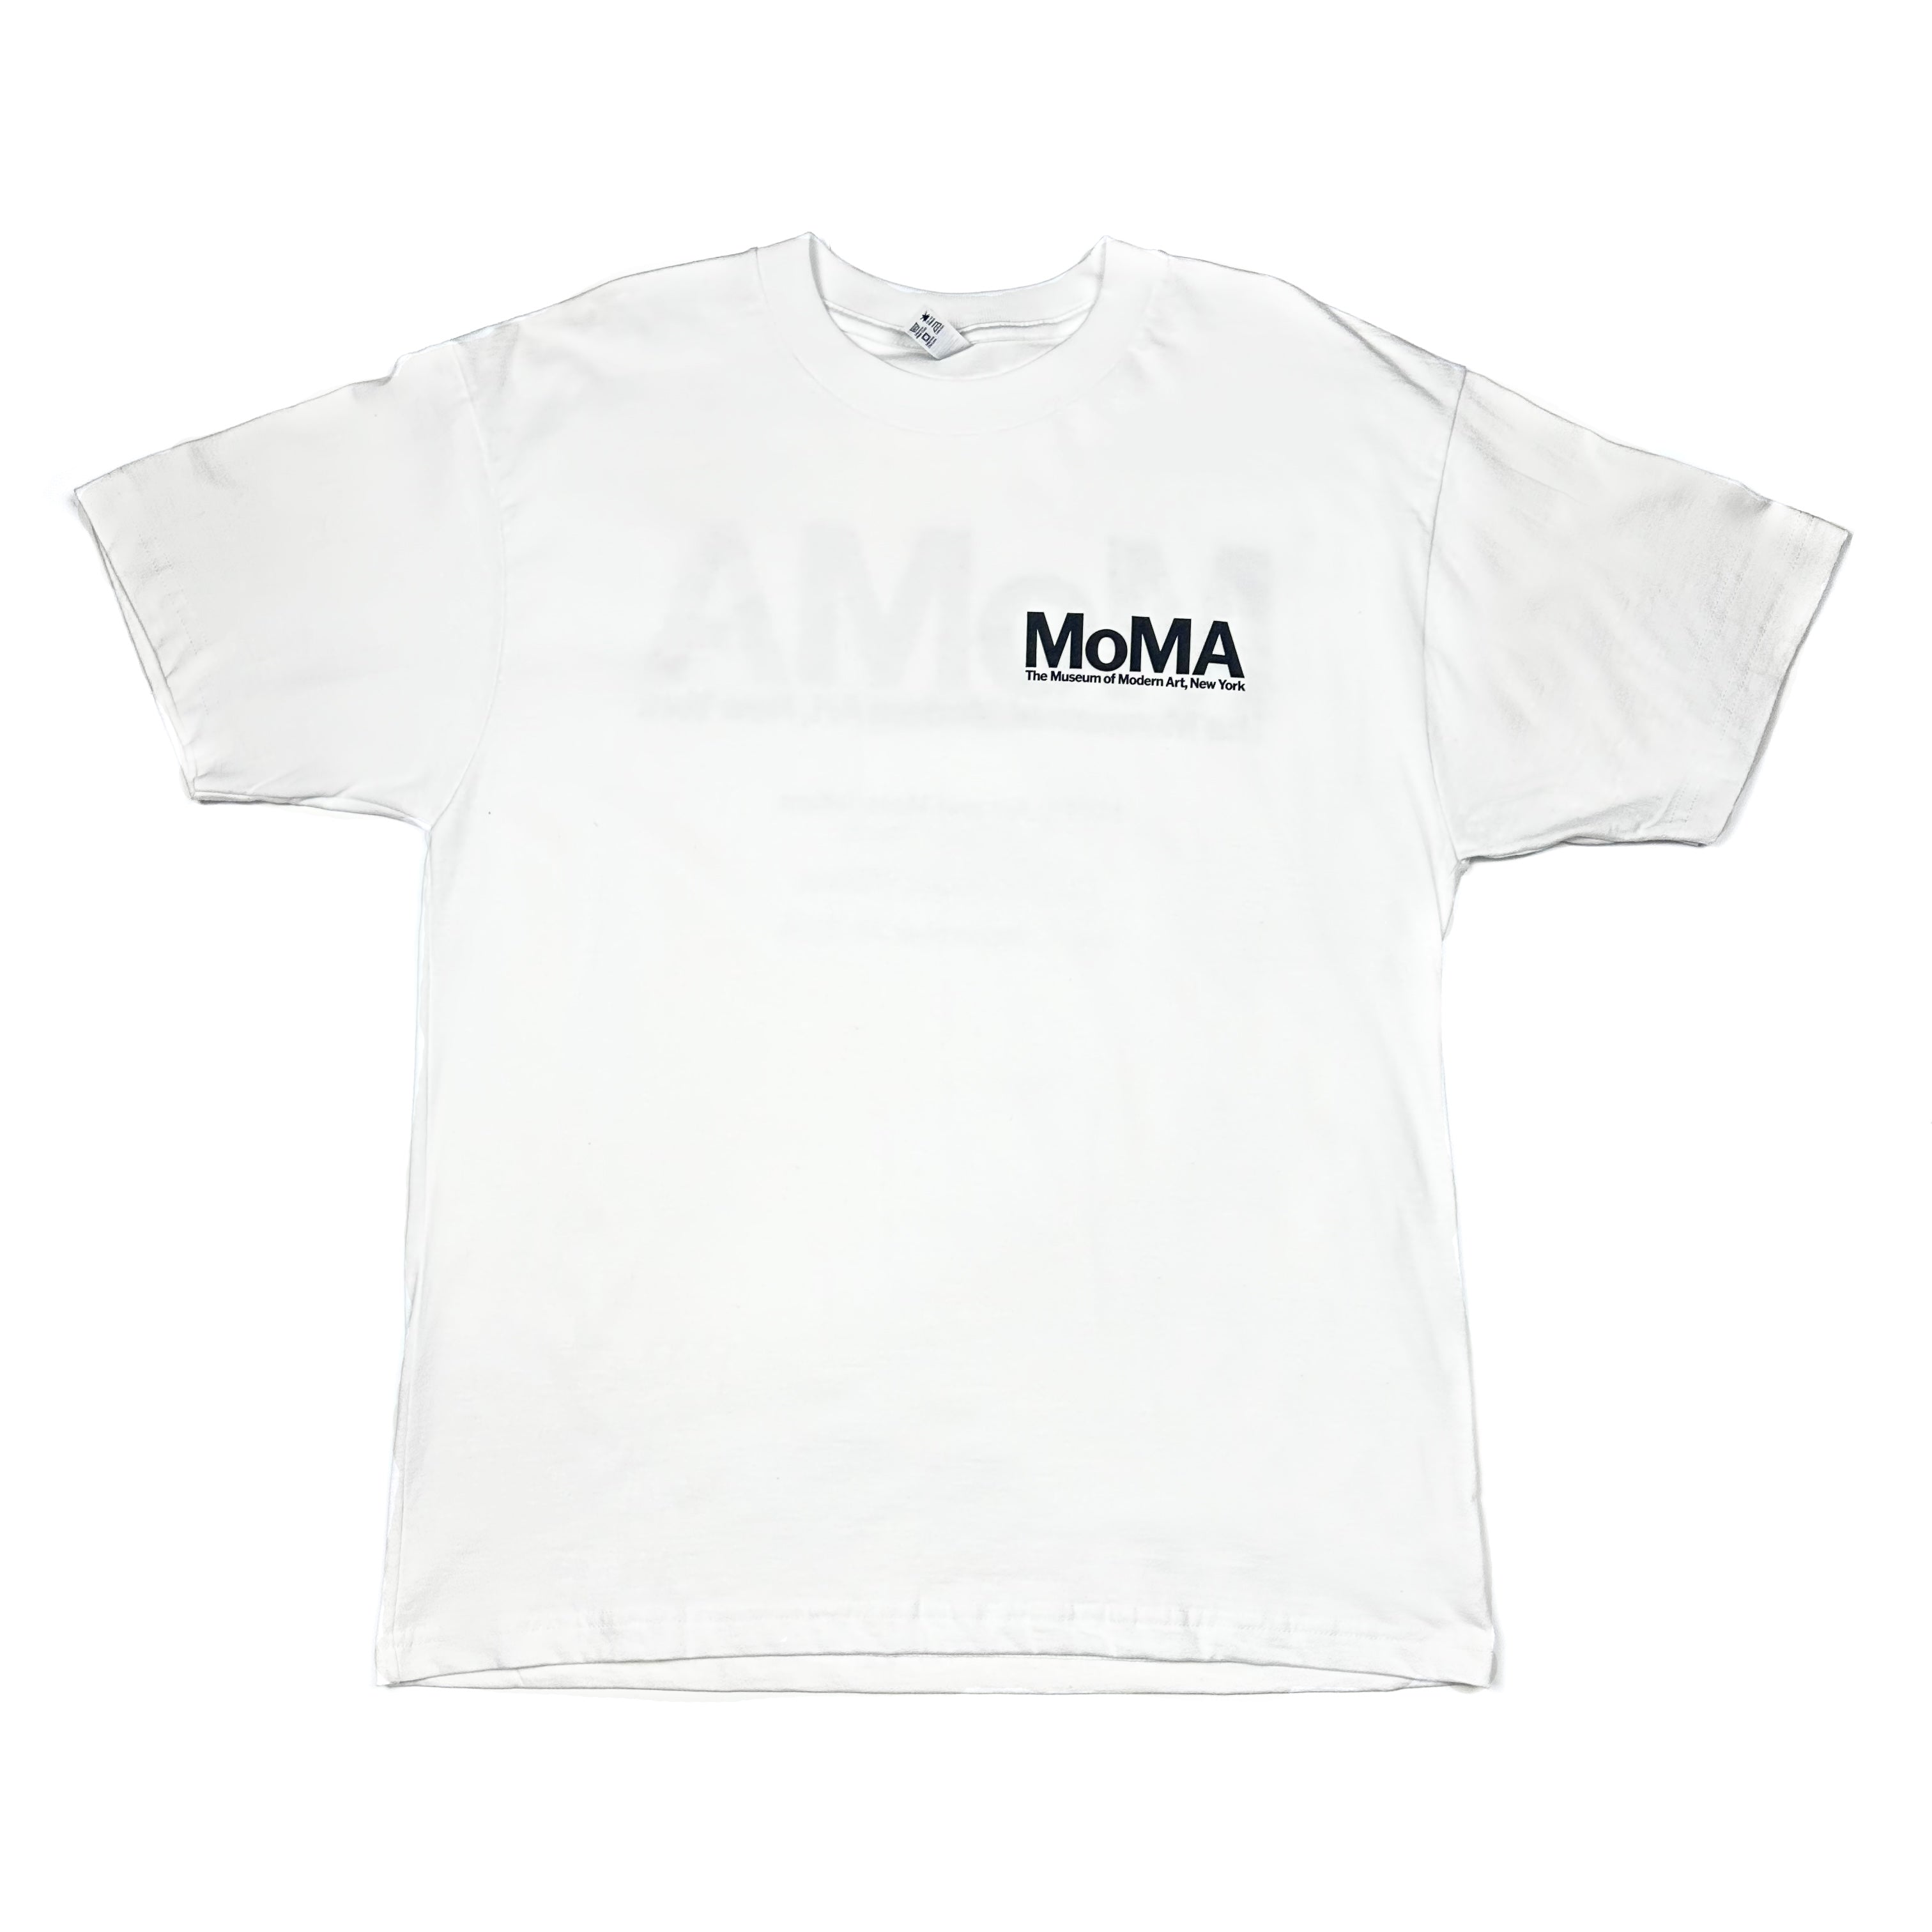 "Hype" MoMA Logo T-Shirt - White